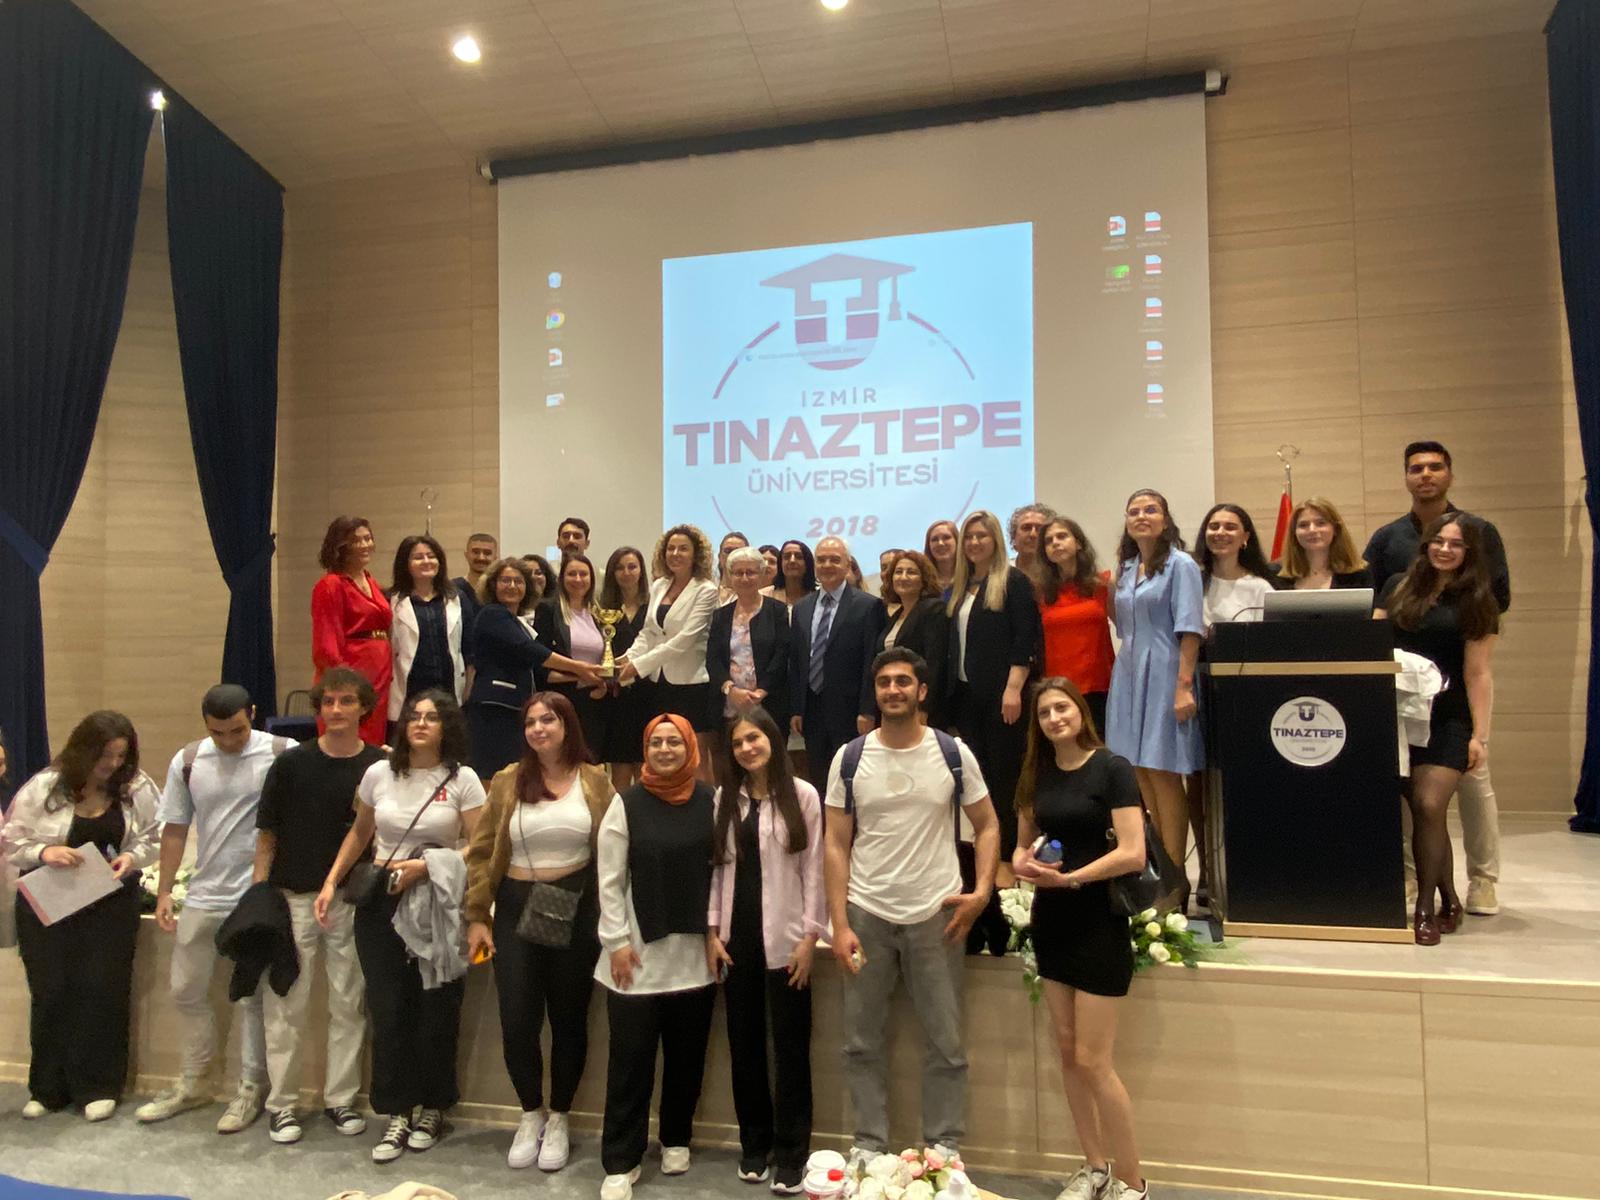 izmitinaz universitesi find and study 9 - İzmir Tınaztepe Üniversitesi